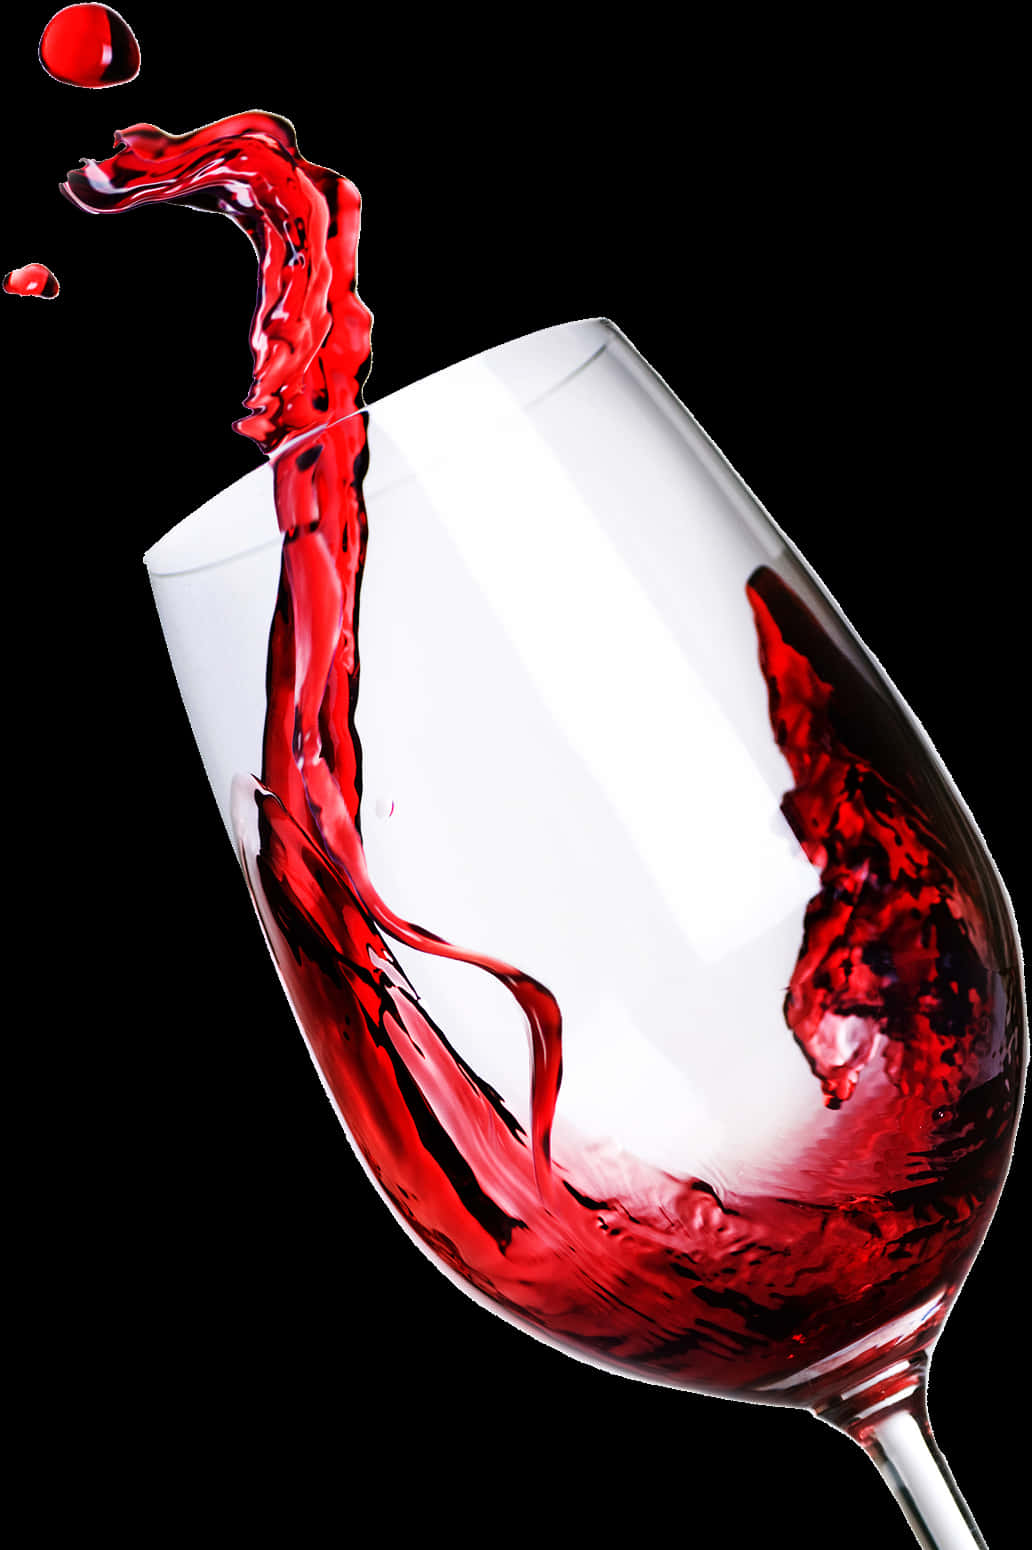 Dynamic Red Wine Splash.jpg PNG image